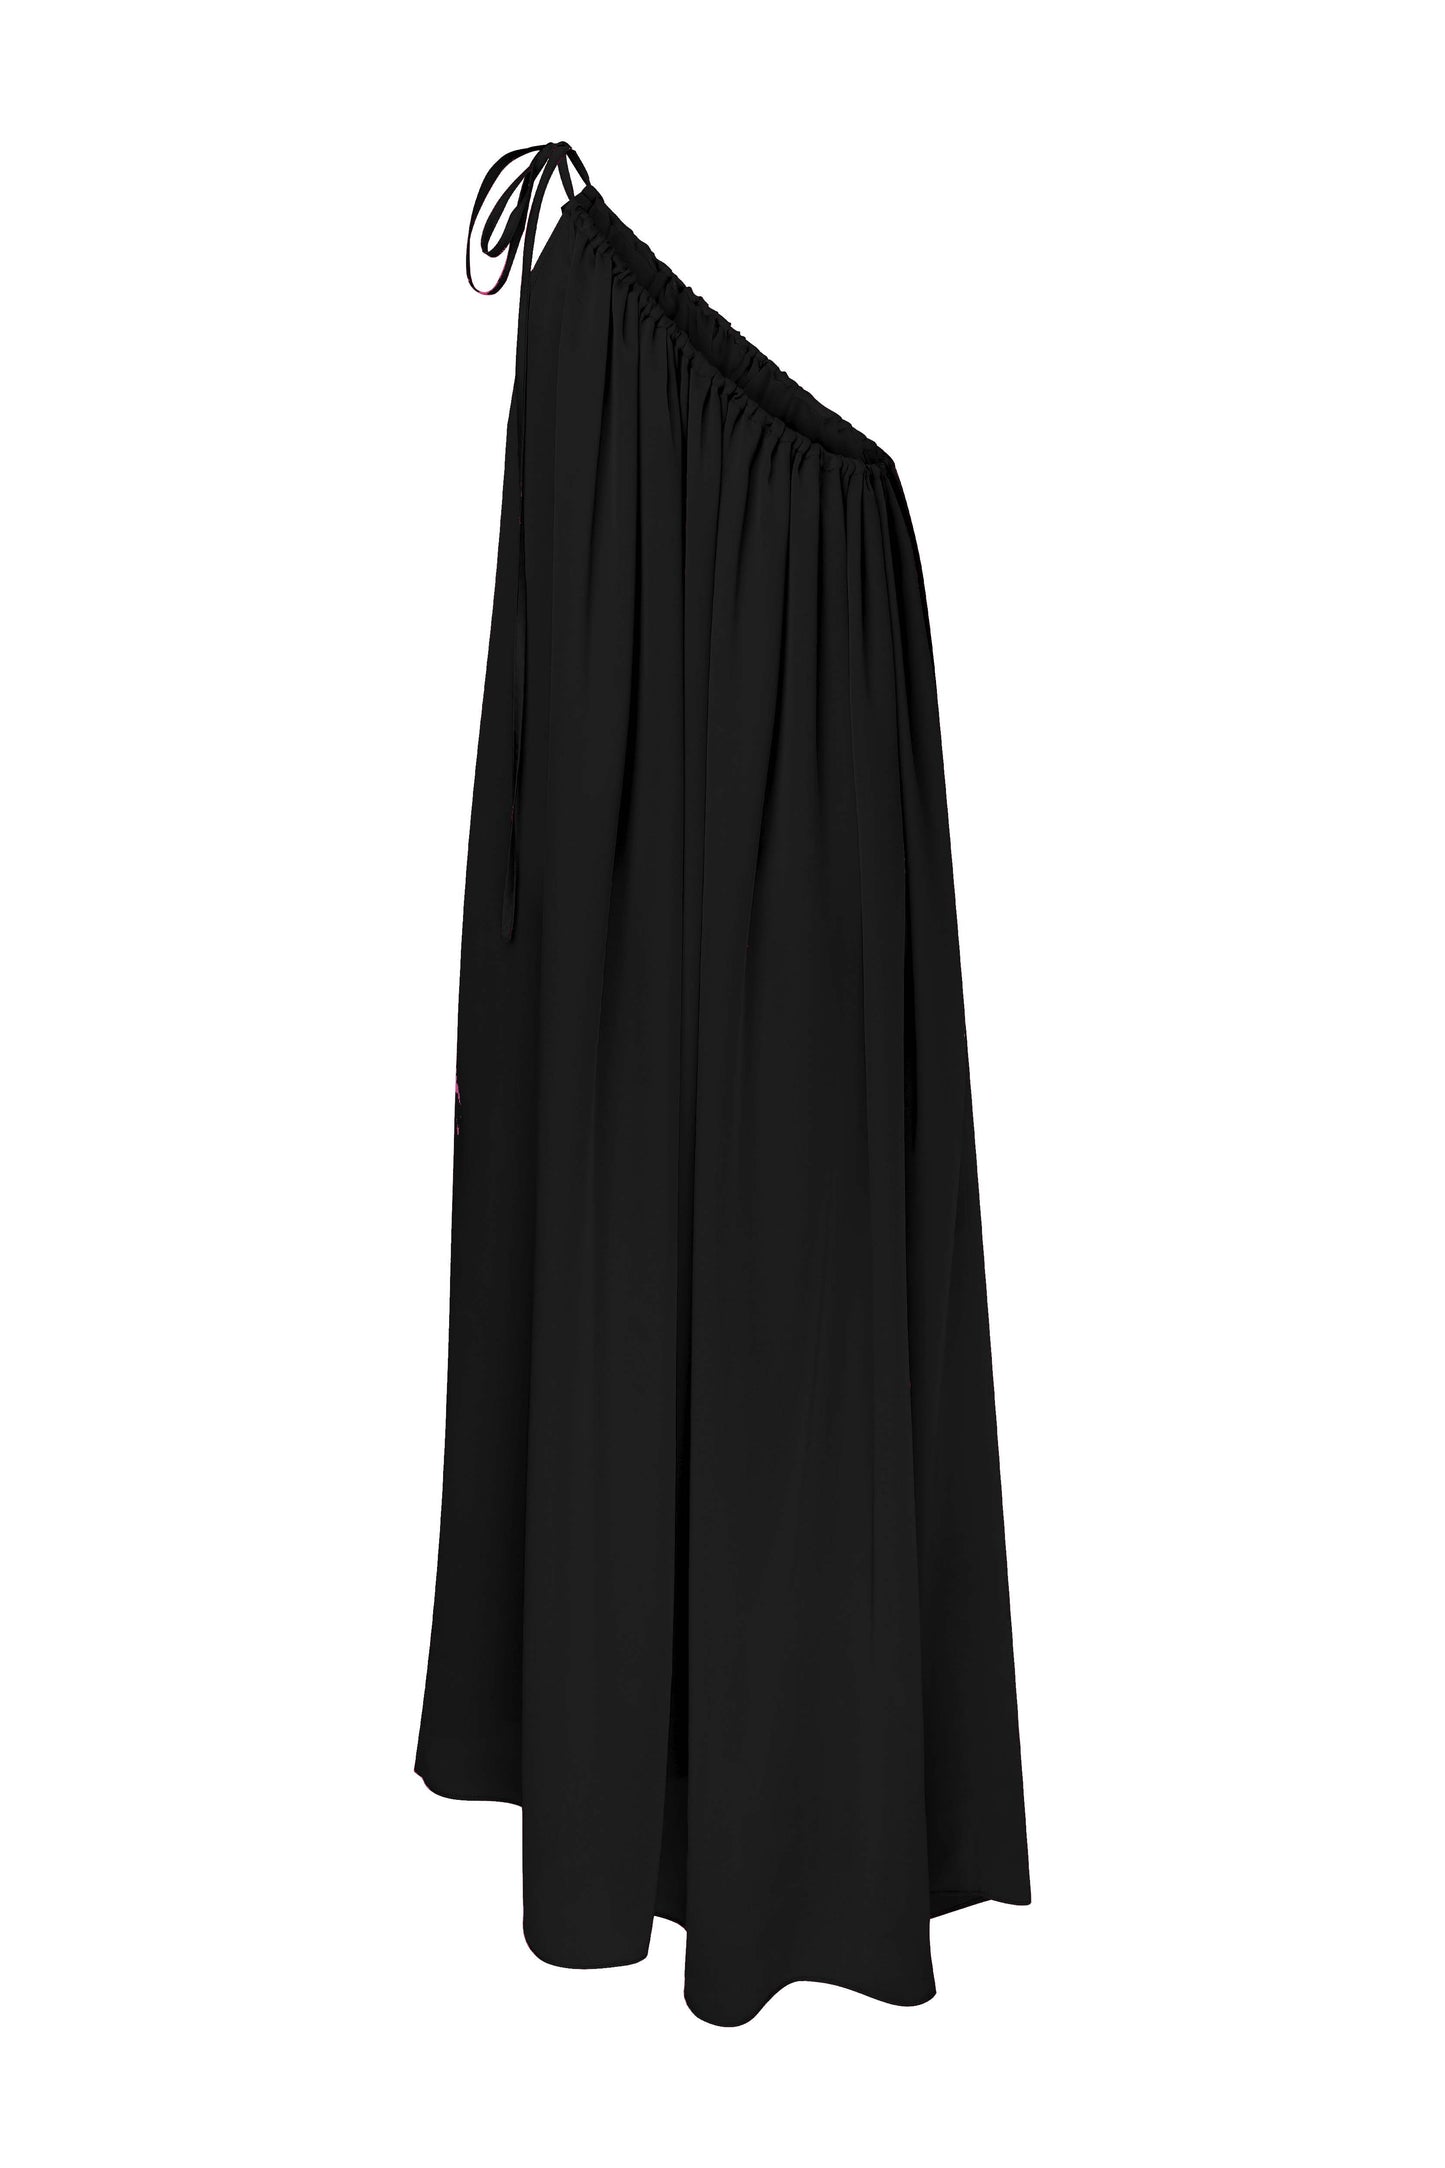 Chrissy One-Shoulder Maxi Dress in Black